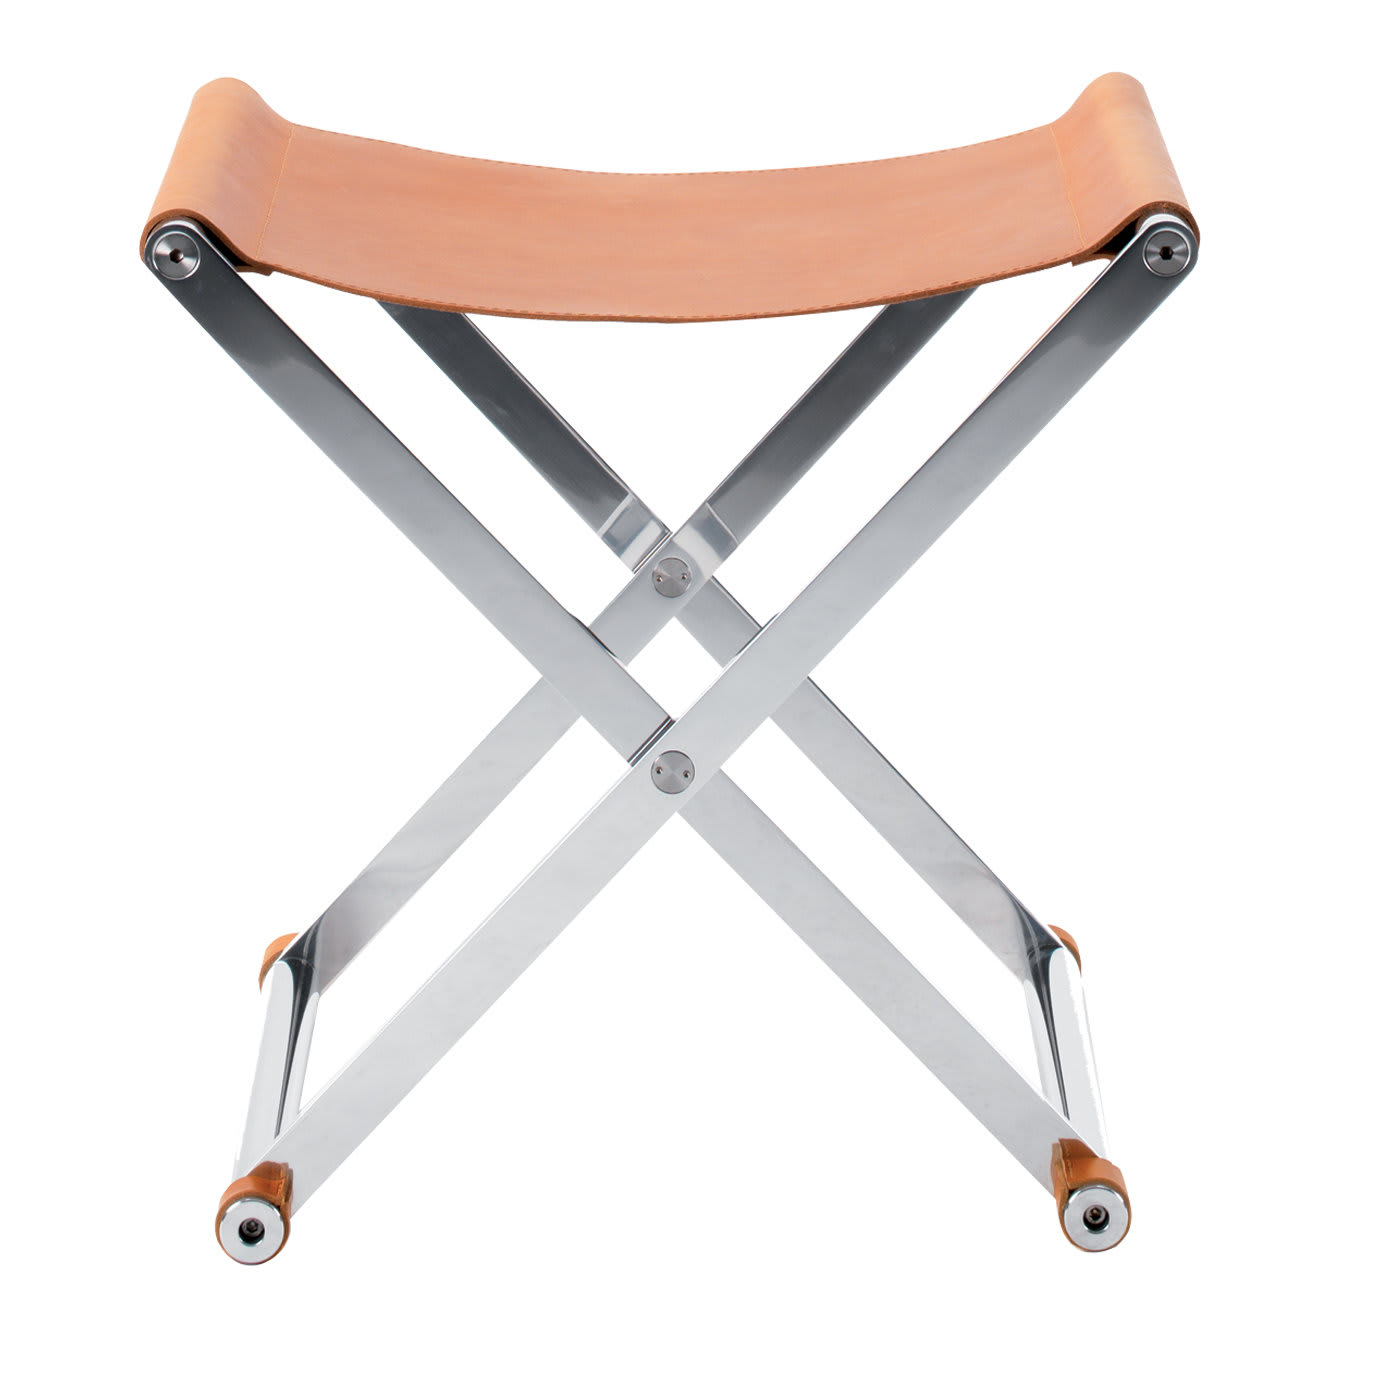 Andrea Foldable Seat by Enrico Tonucci - Manifestodesign